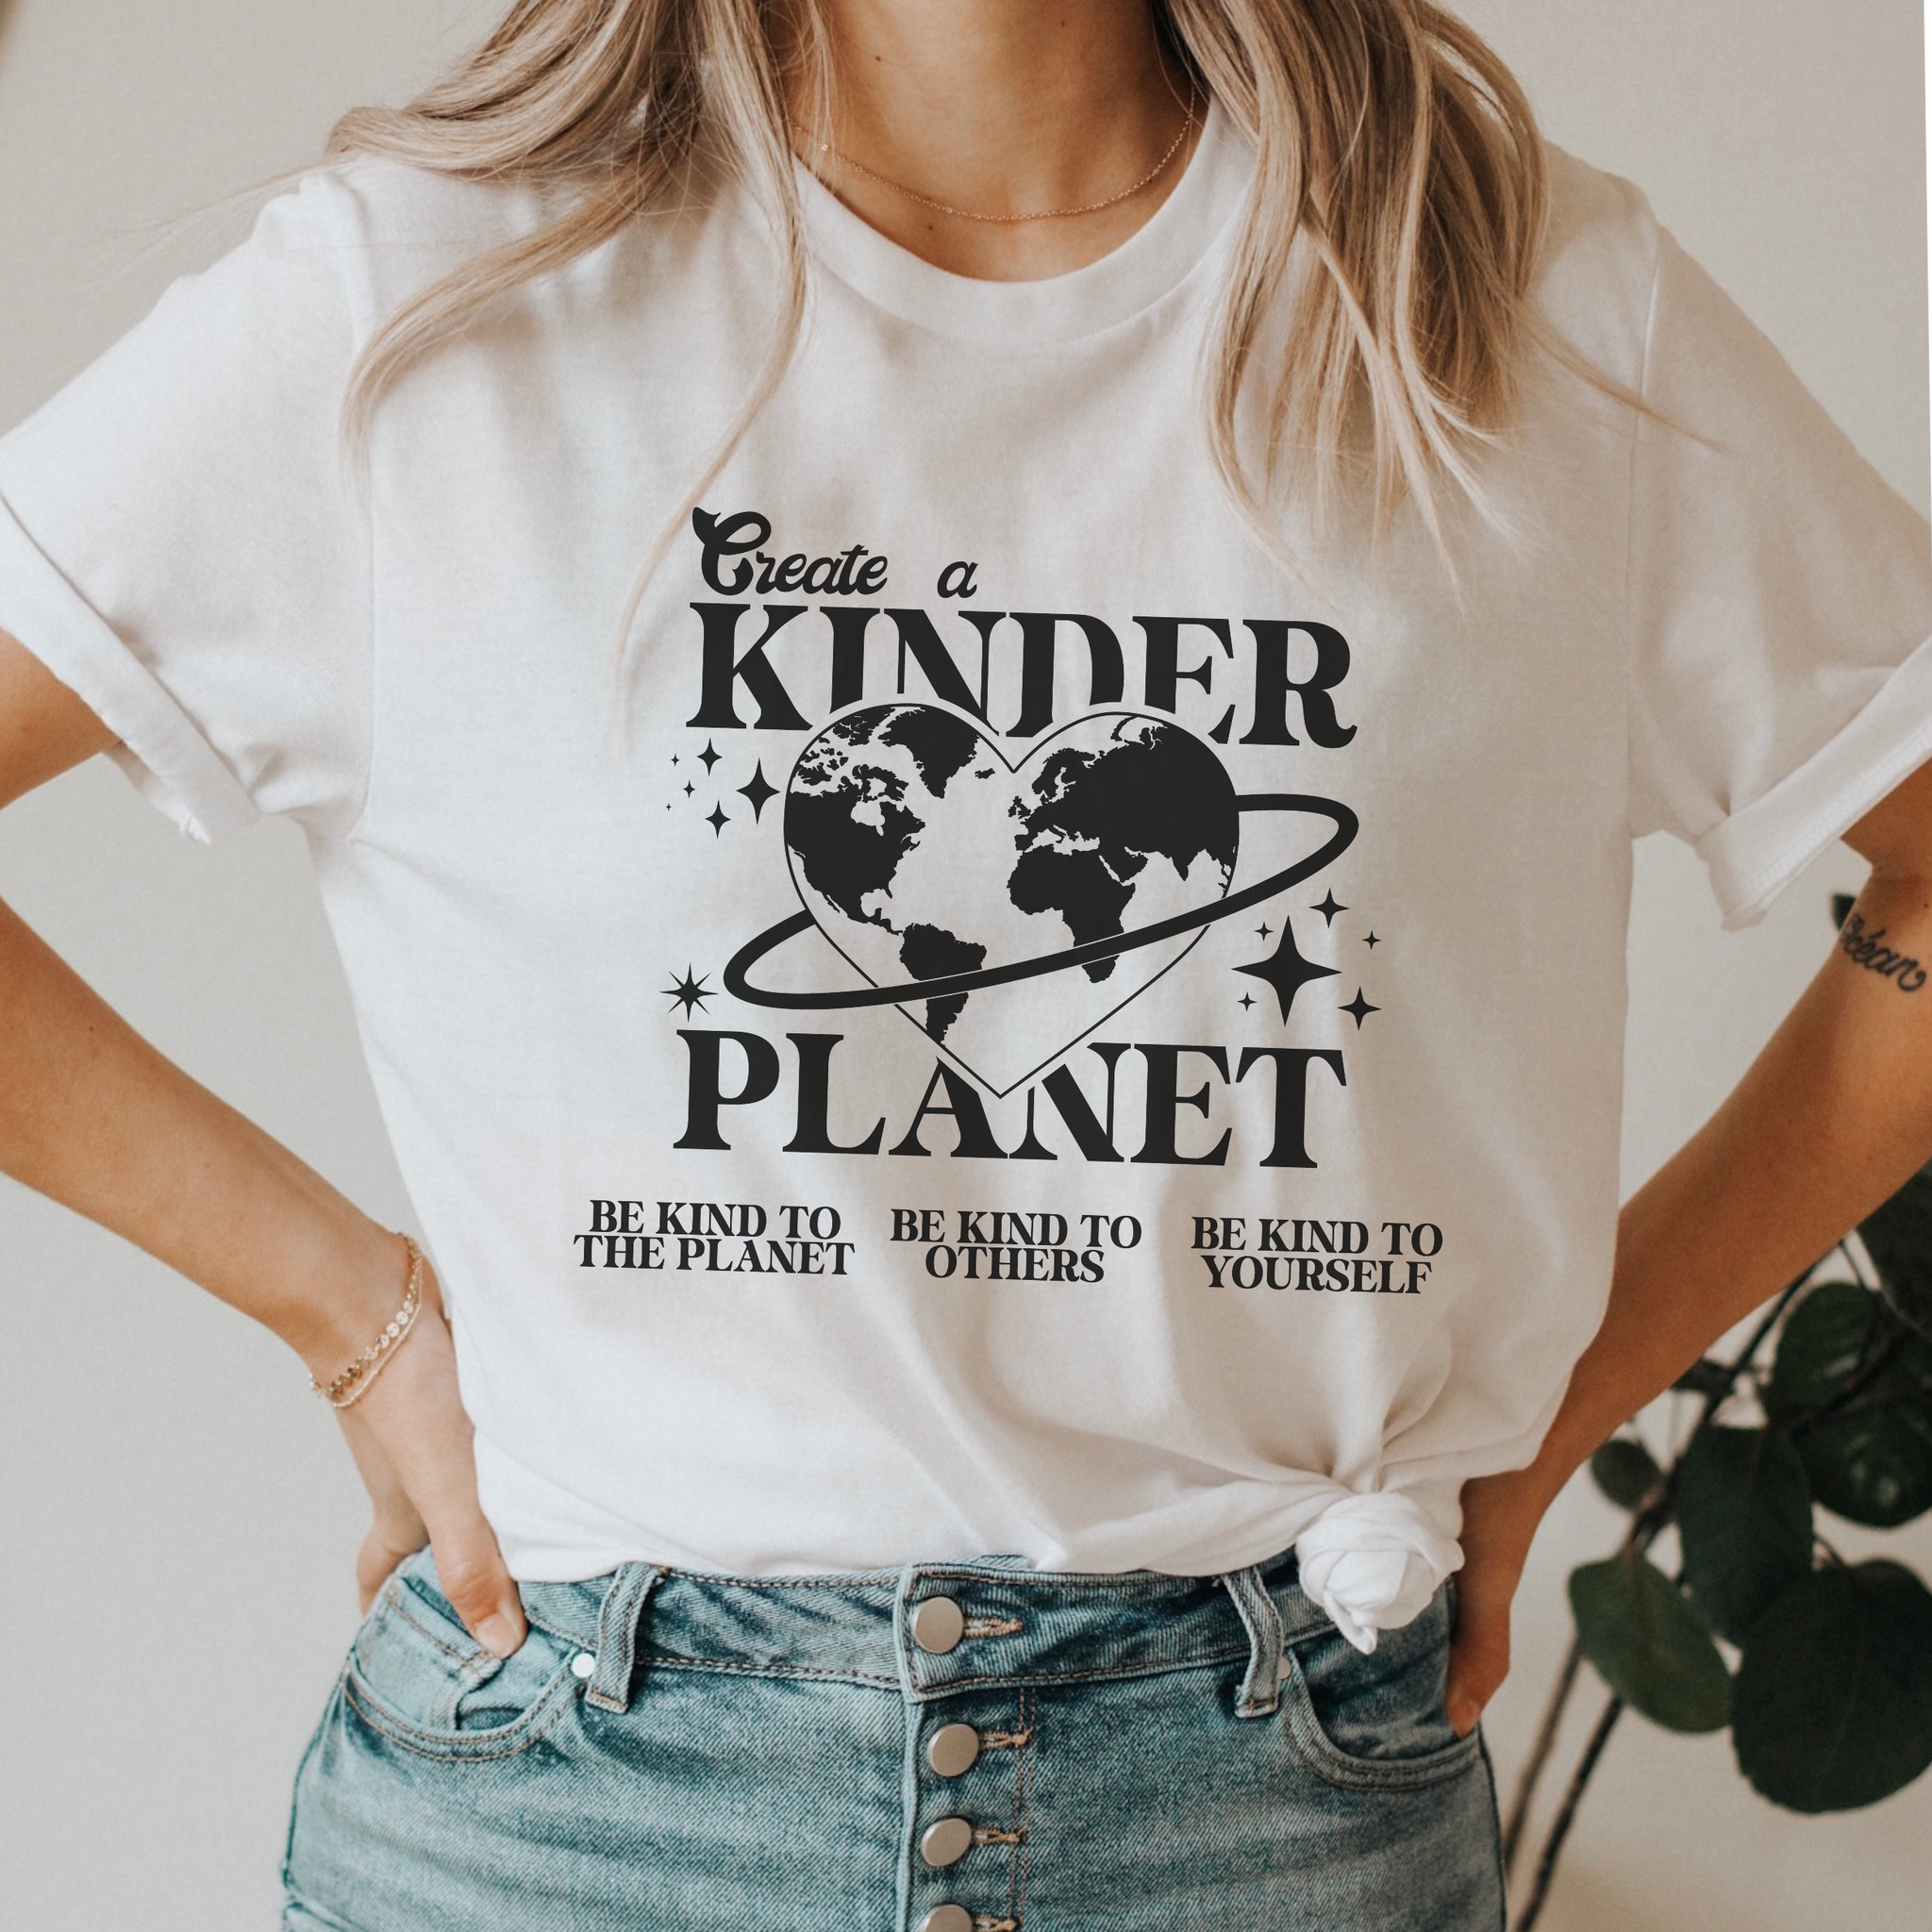 Create a Kinder Planet Graphic Tshirt